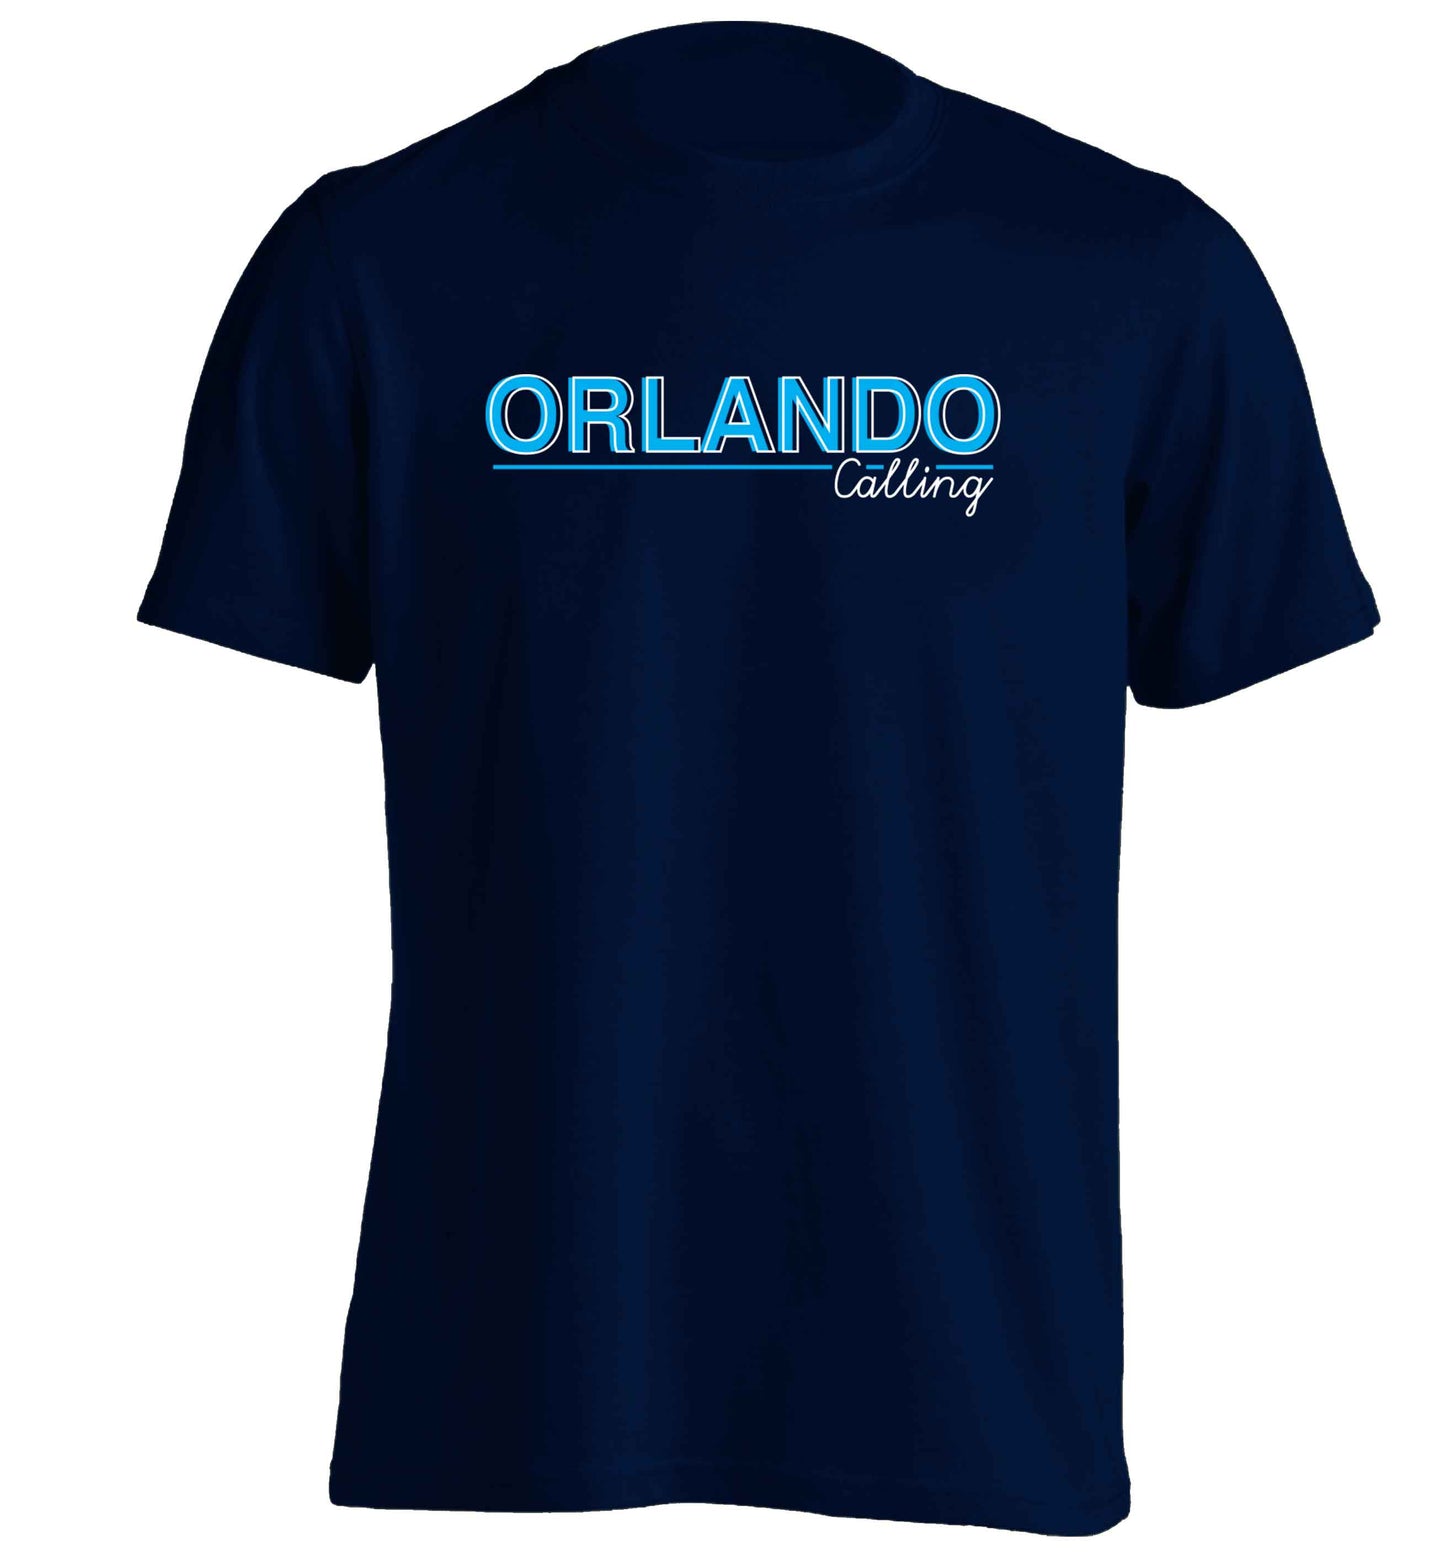 Orlando calling adults unisex navy Tshirt 2XL